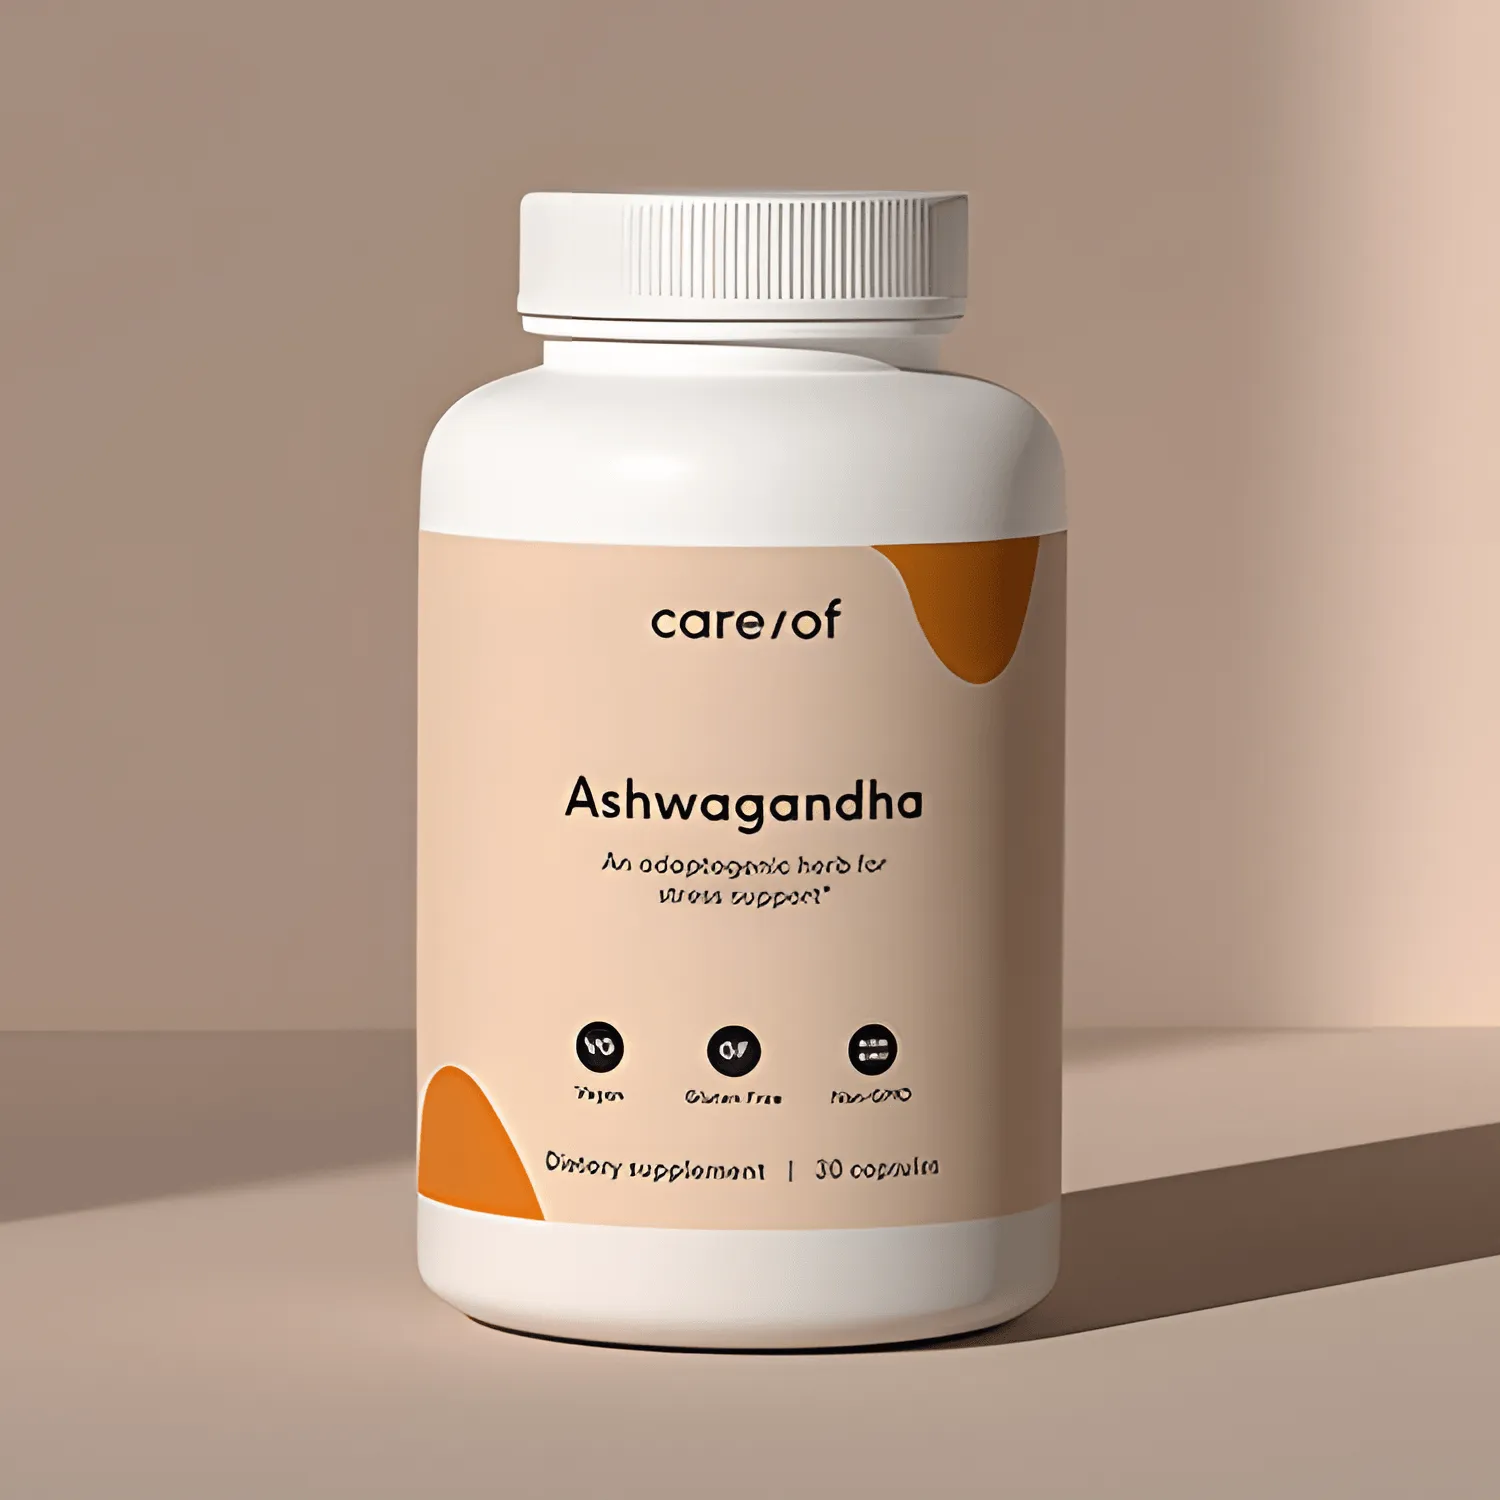 Free Care/Of Ashwagandha Supplements